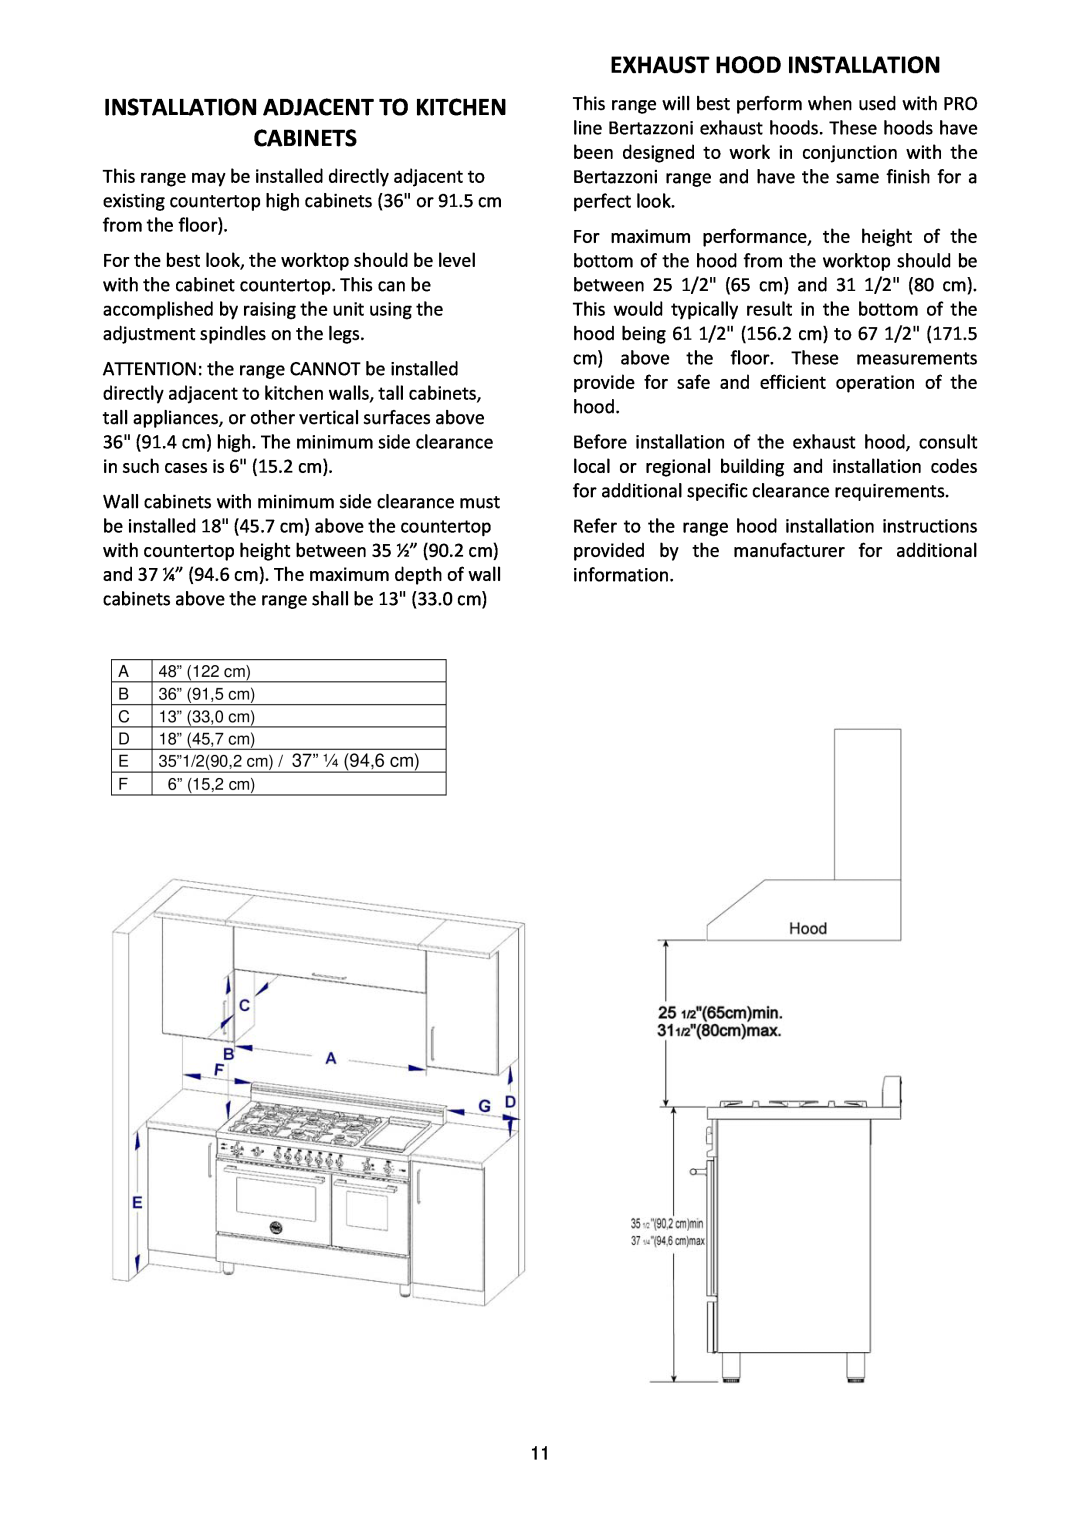 Bertazzoni MAS486GGASXT dimensions Installation Adjacent To Kitchen Cabinets, Exhaust Hood Installation 